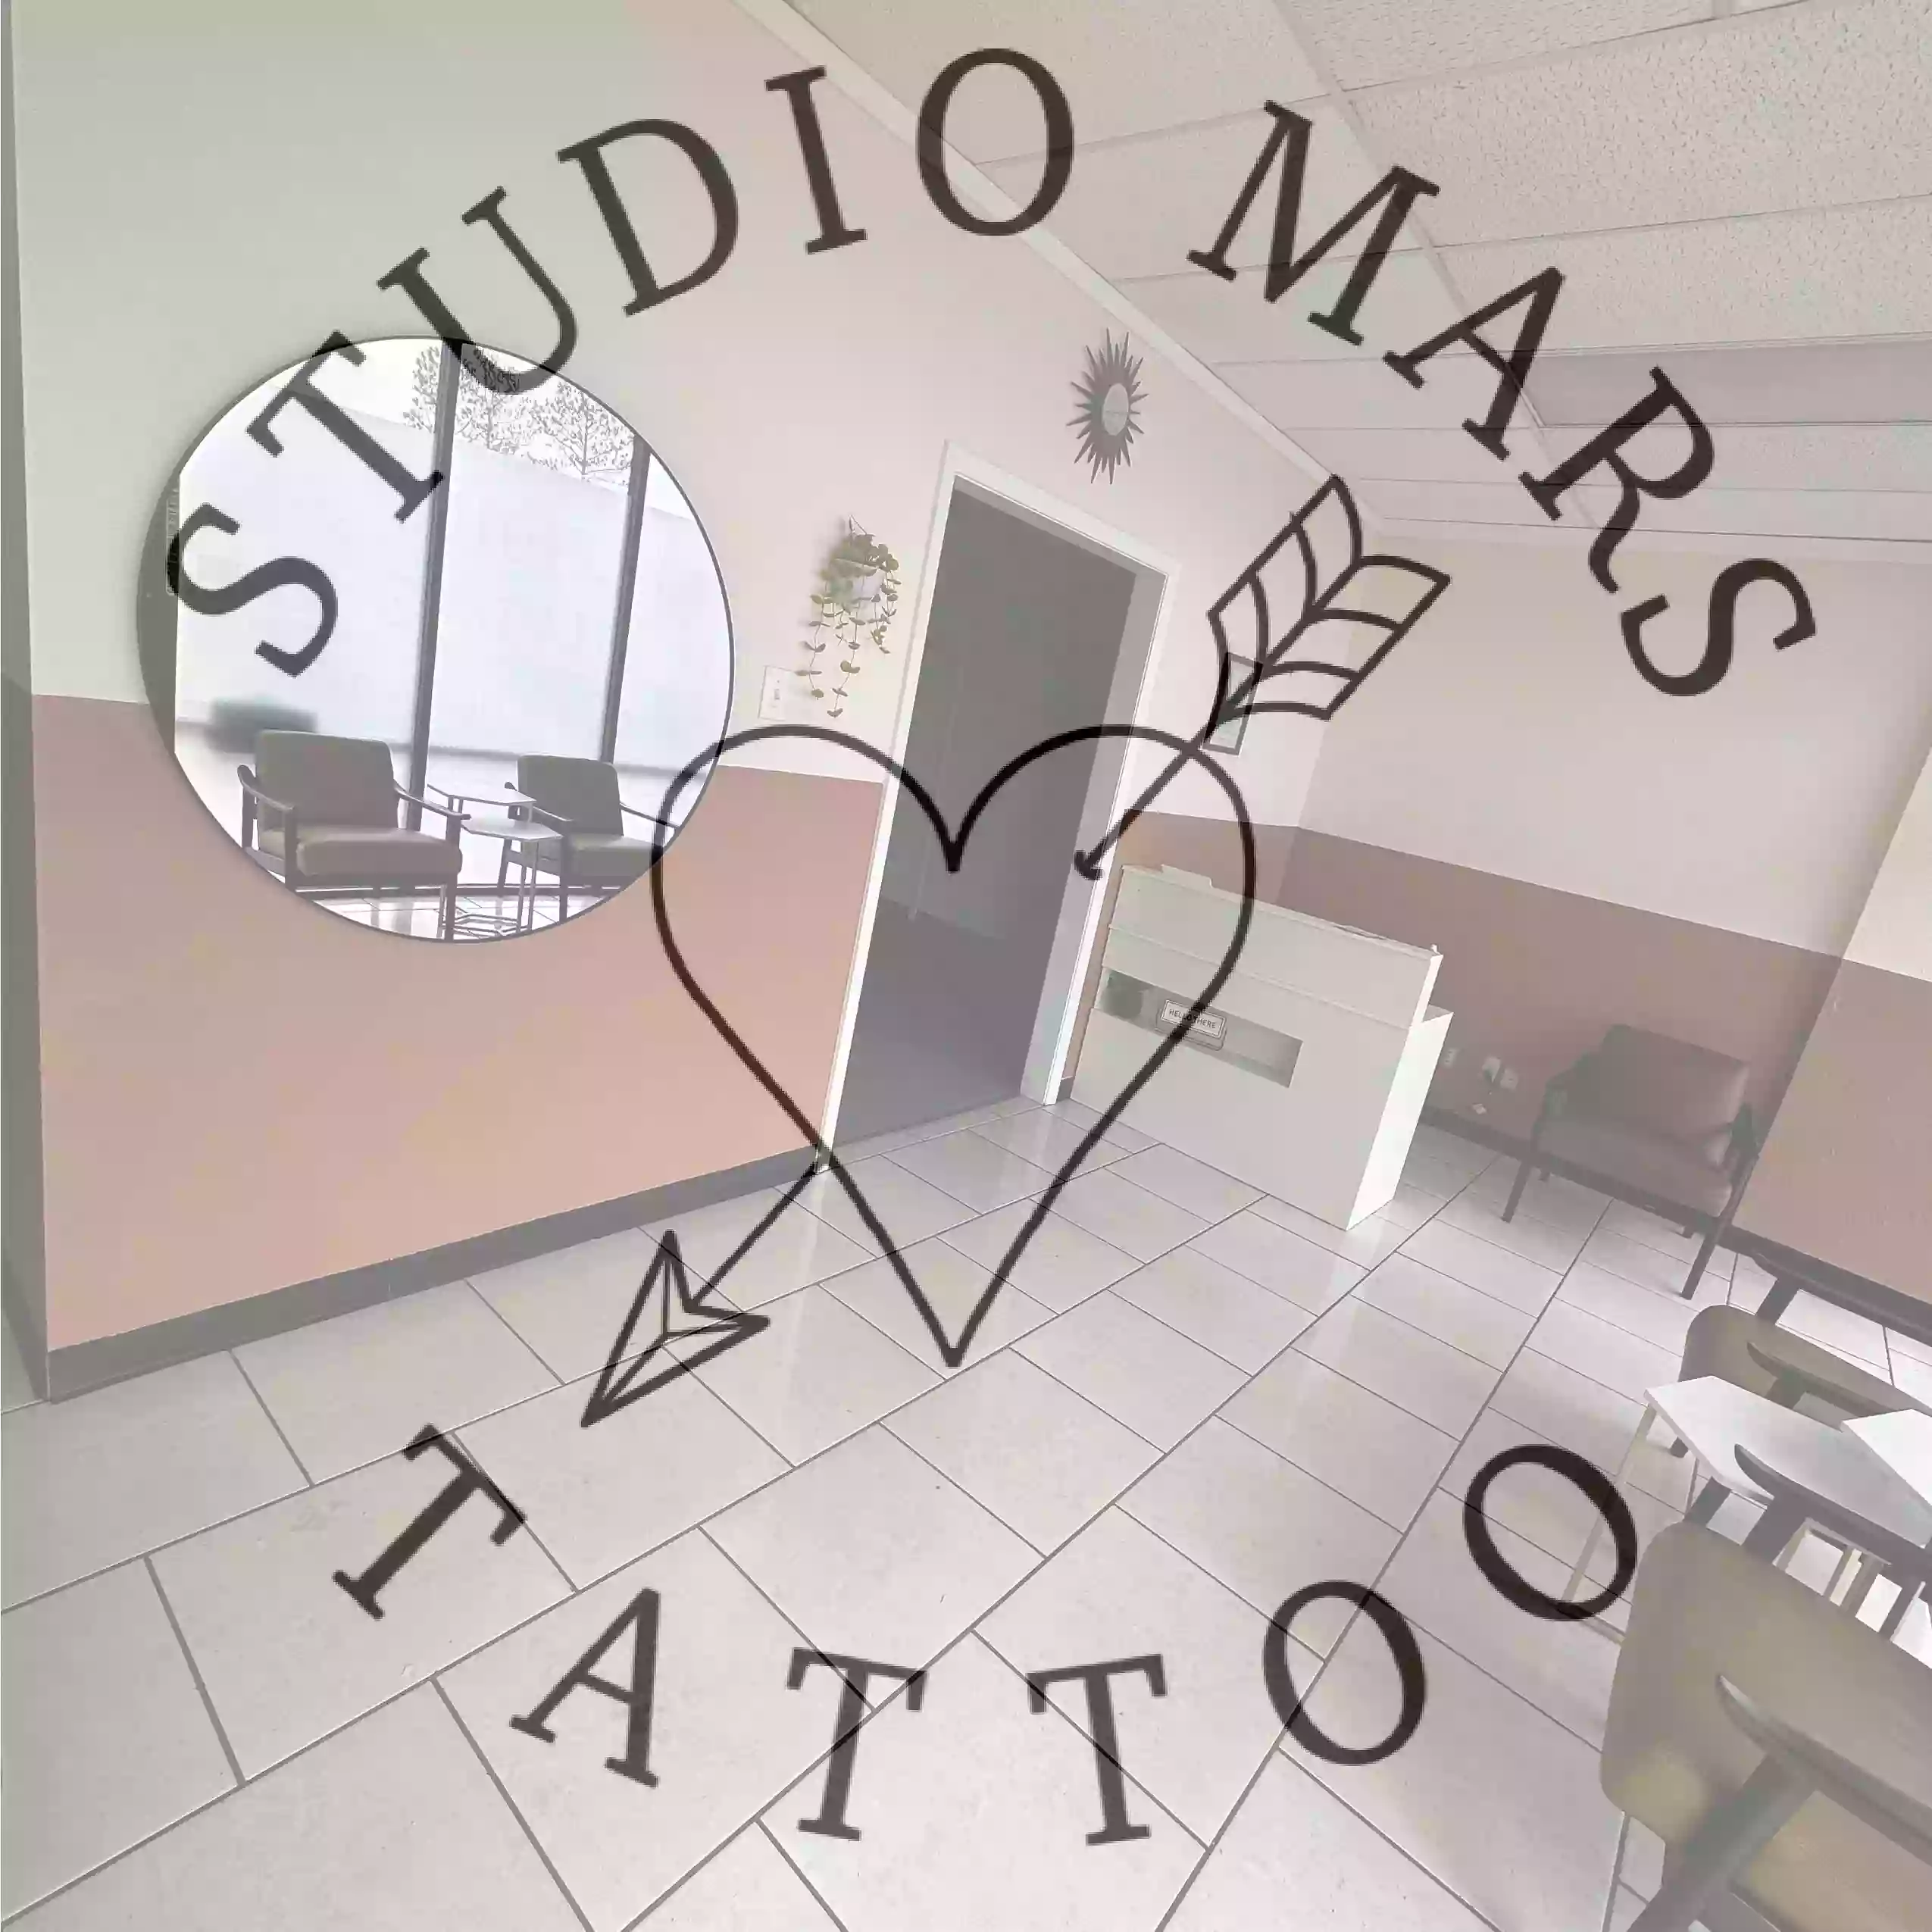 Studio Mars